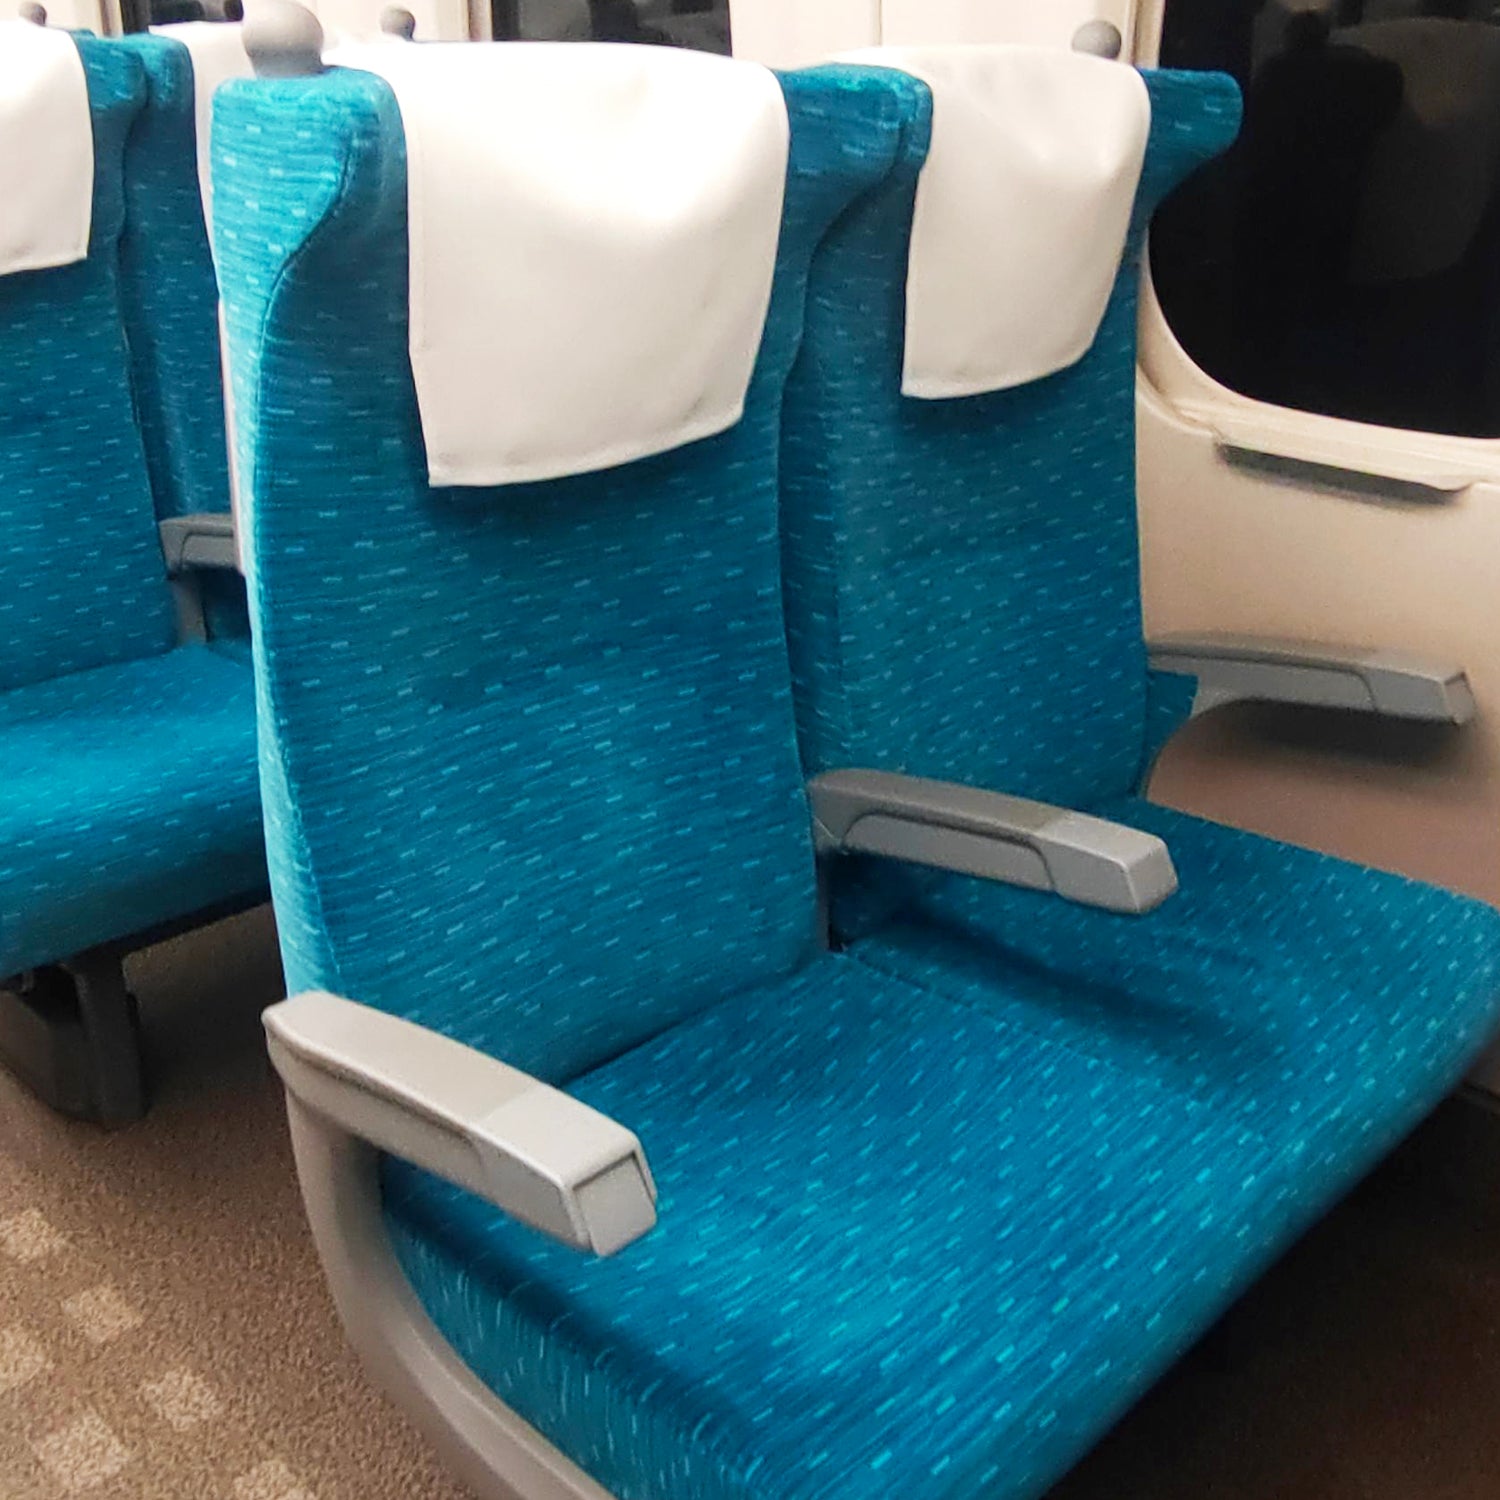 N700A東海道新幹線モケットパスケースの本体素材には、N700A東海道新幹線の座席から取り出された生地を採用しています。